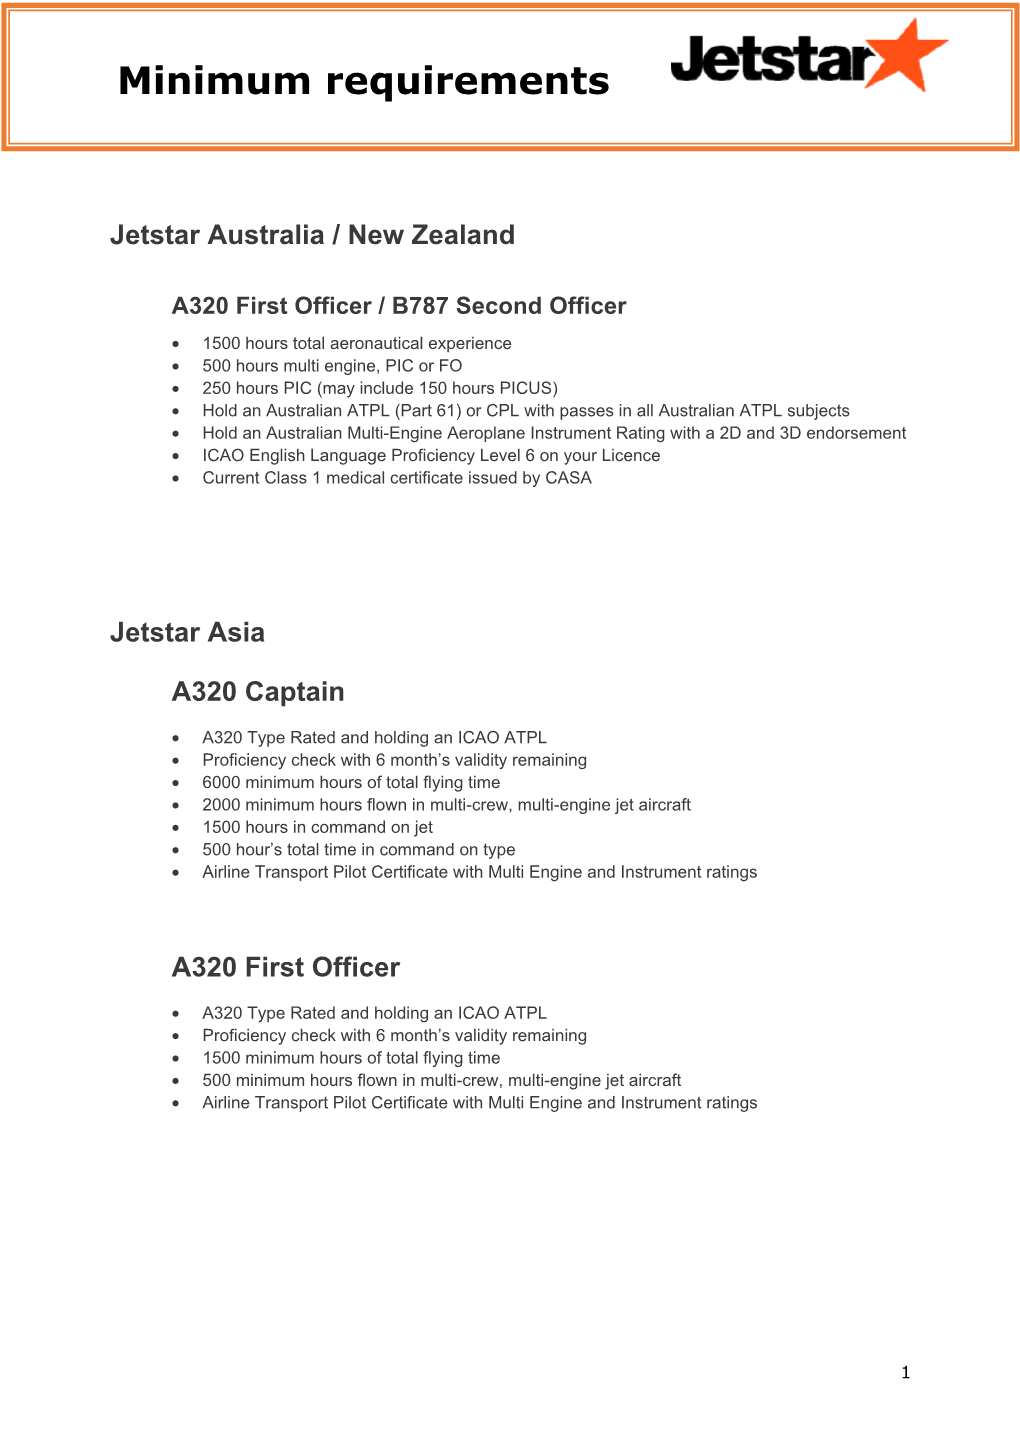 Jetstar Direct Entry Pilot Minimum Requirements